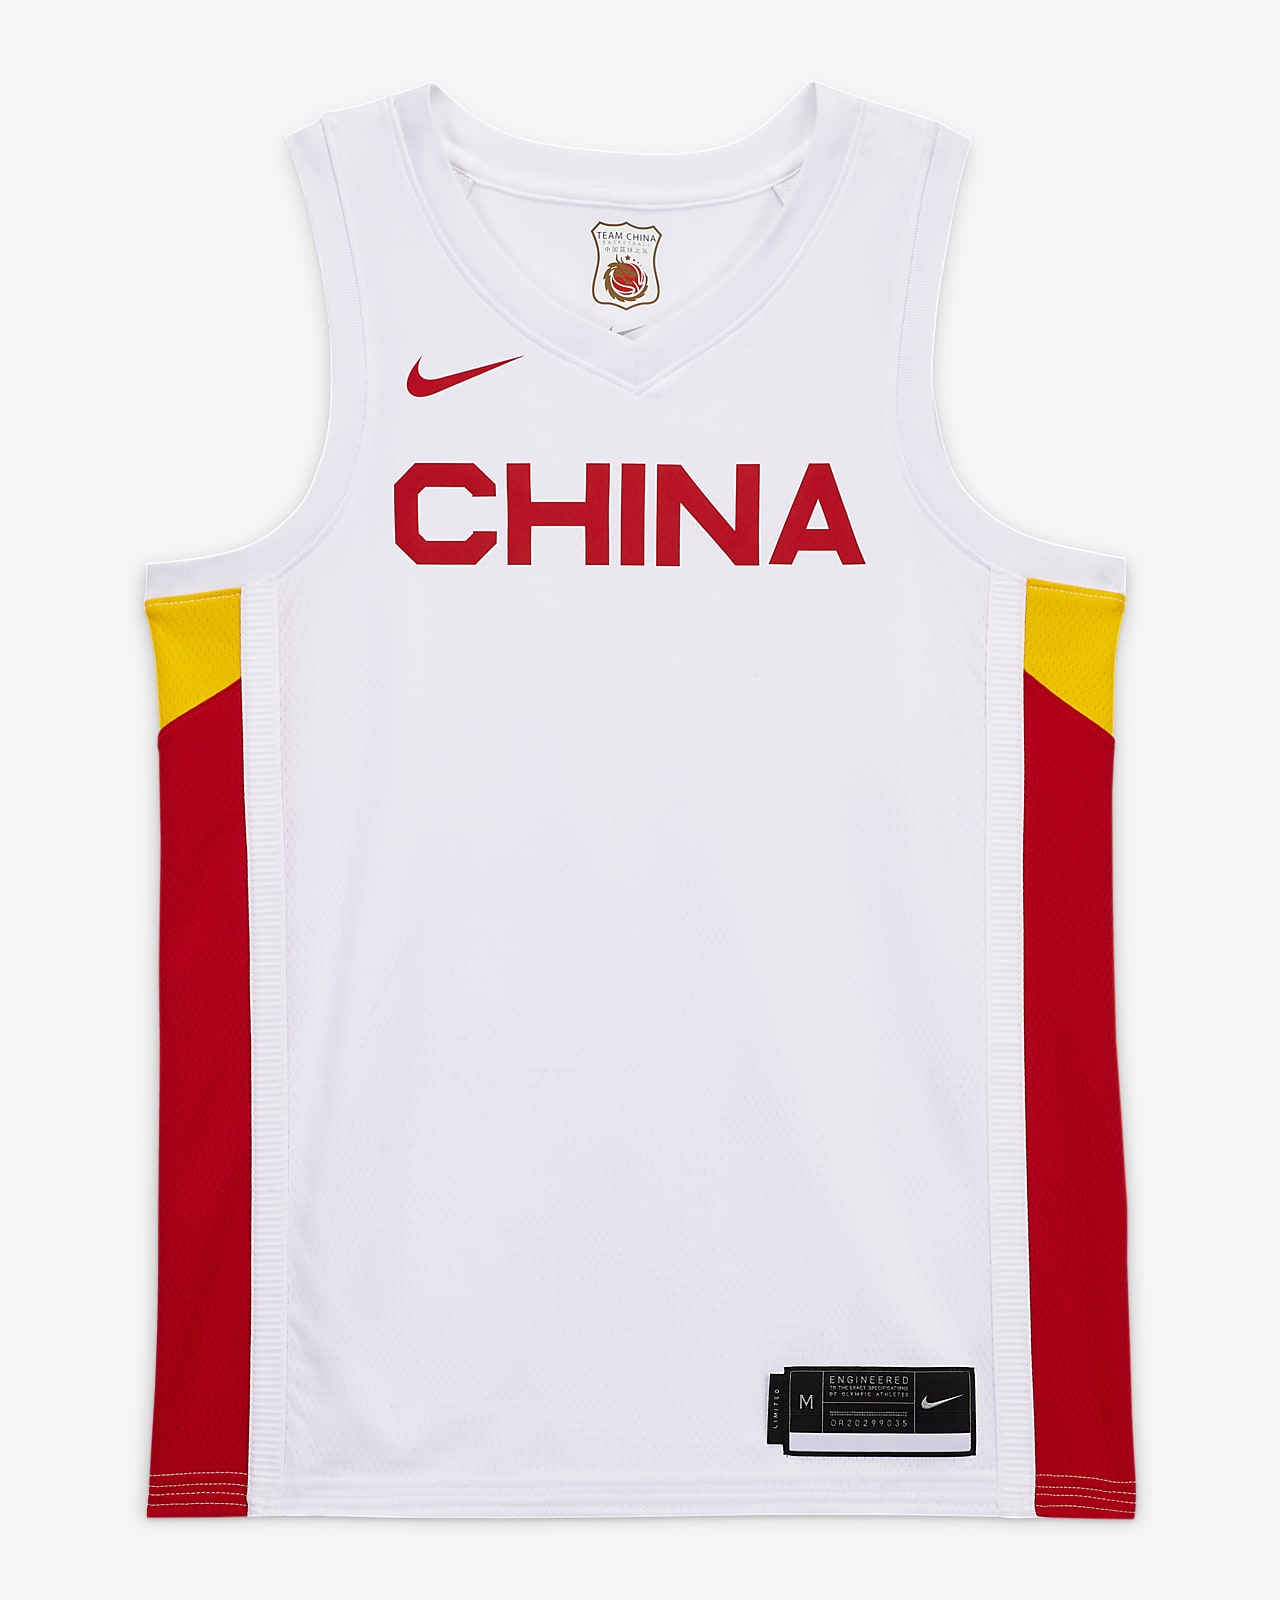 China (Home) Men's Nike Basketball Jersey